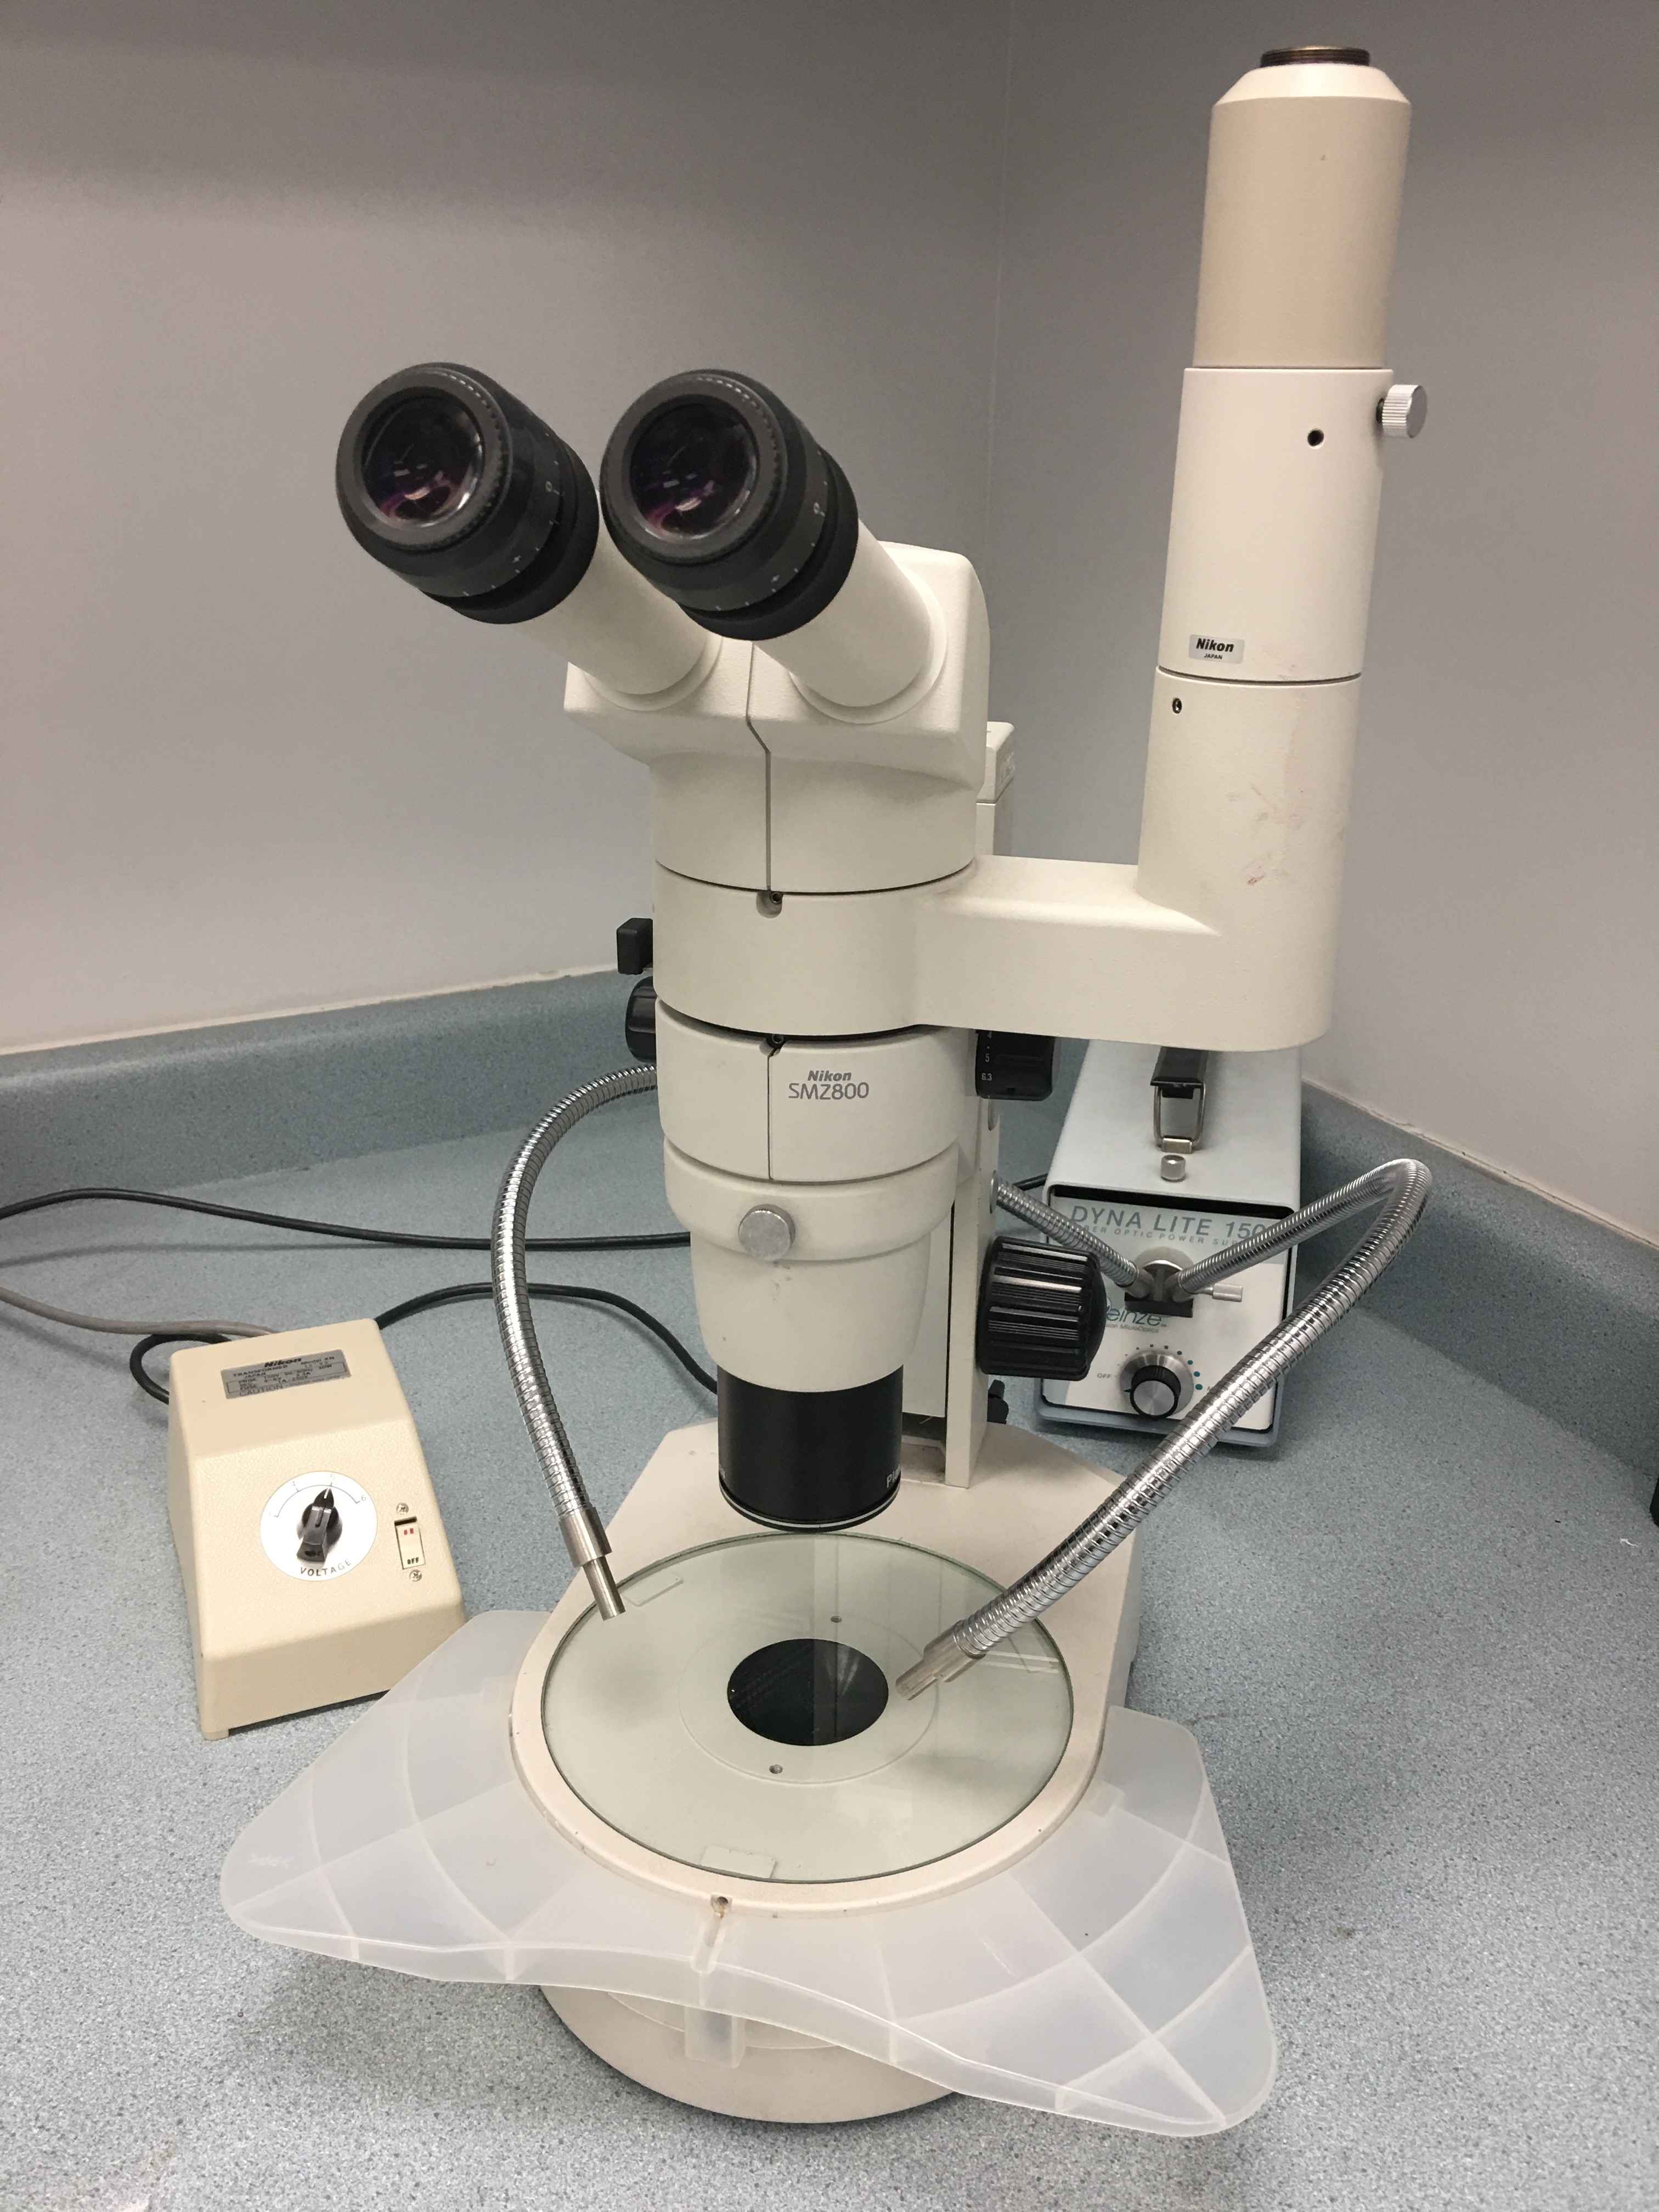 Nikon SMZ800 Dissection Microscope with Nanoject III